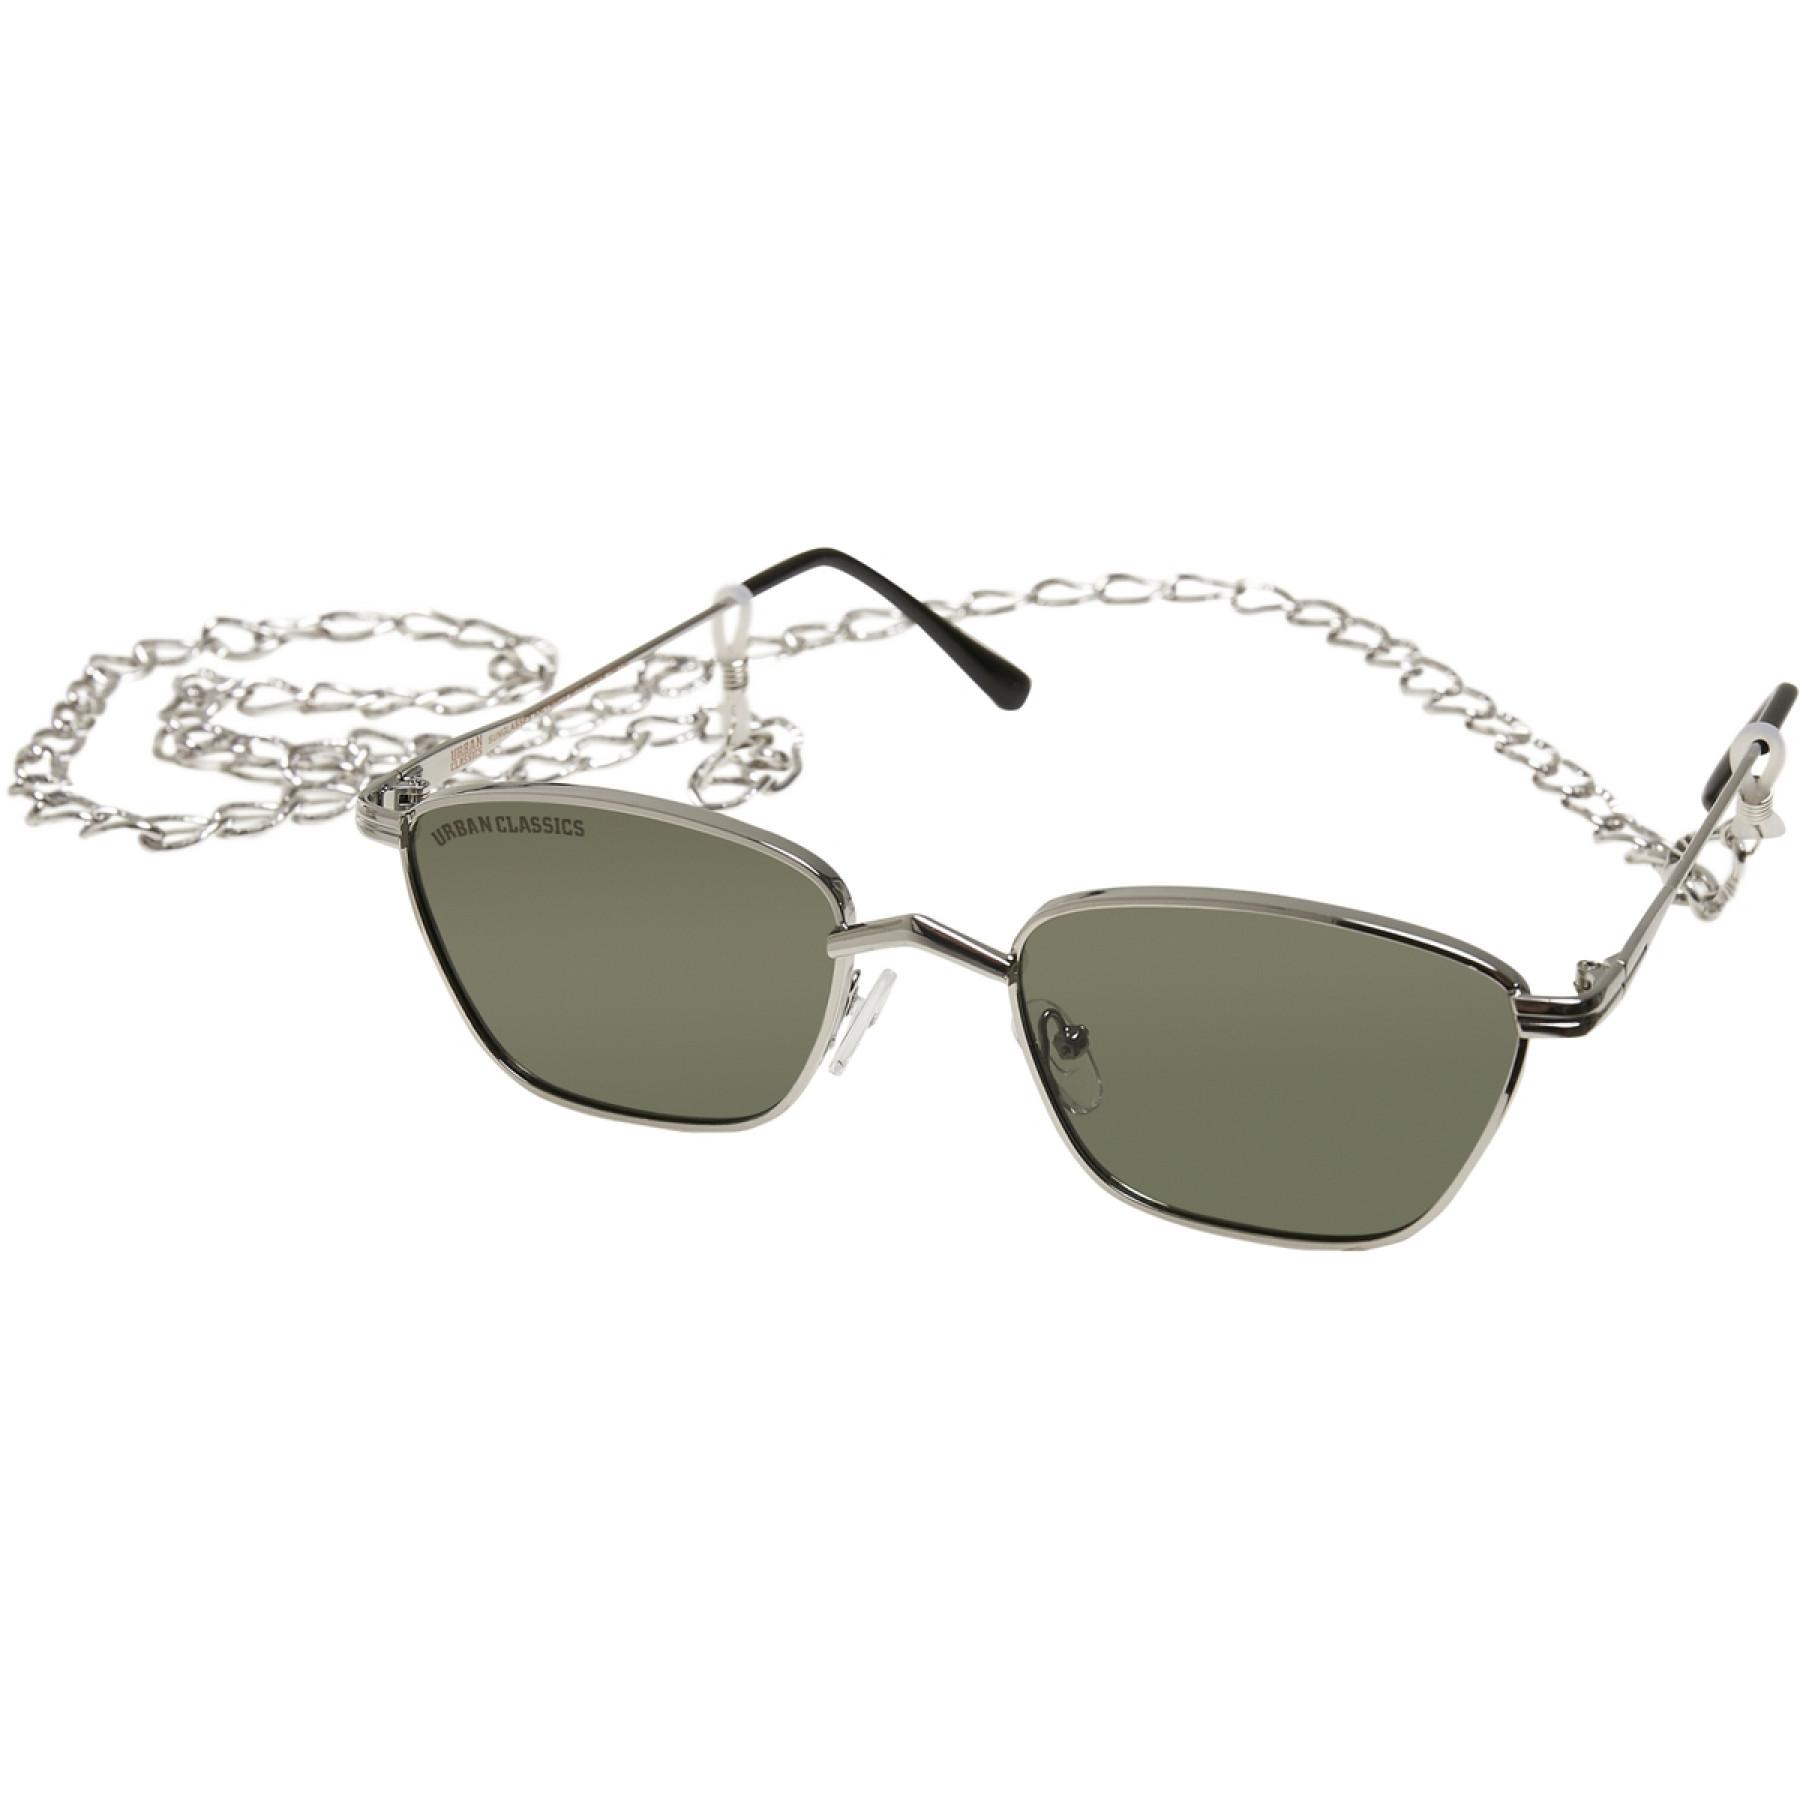 Sunglasses Urban Classics kalymnos with chain